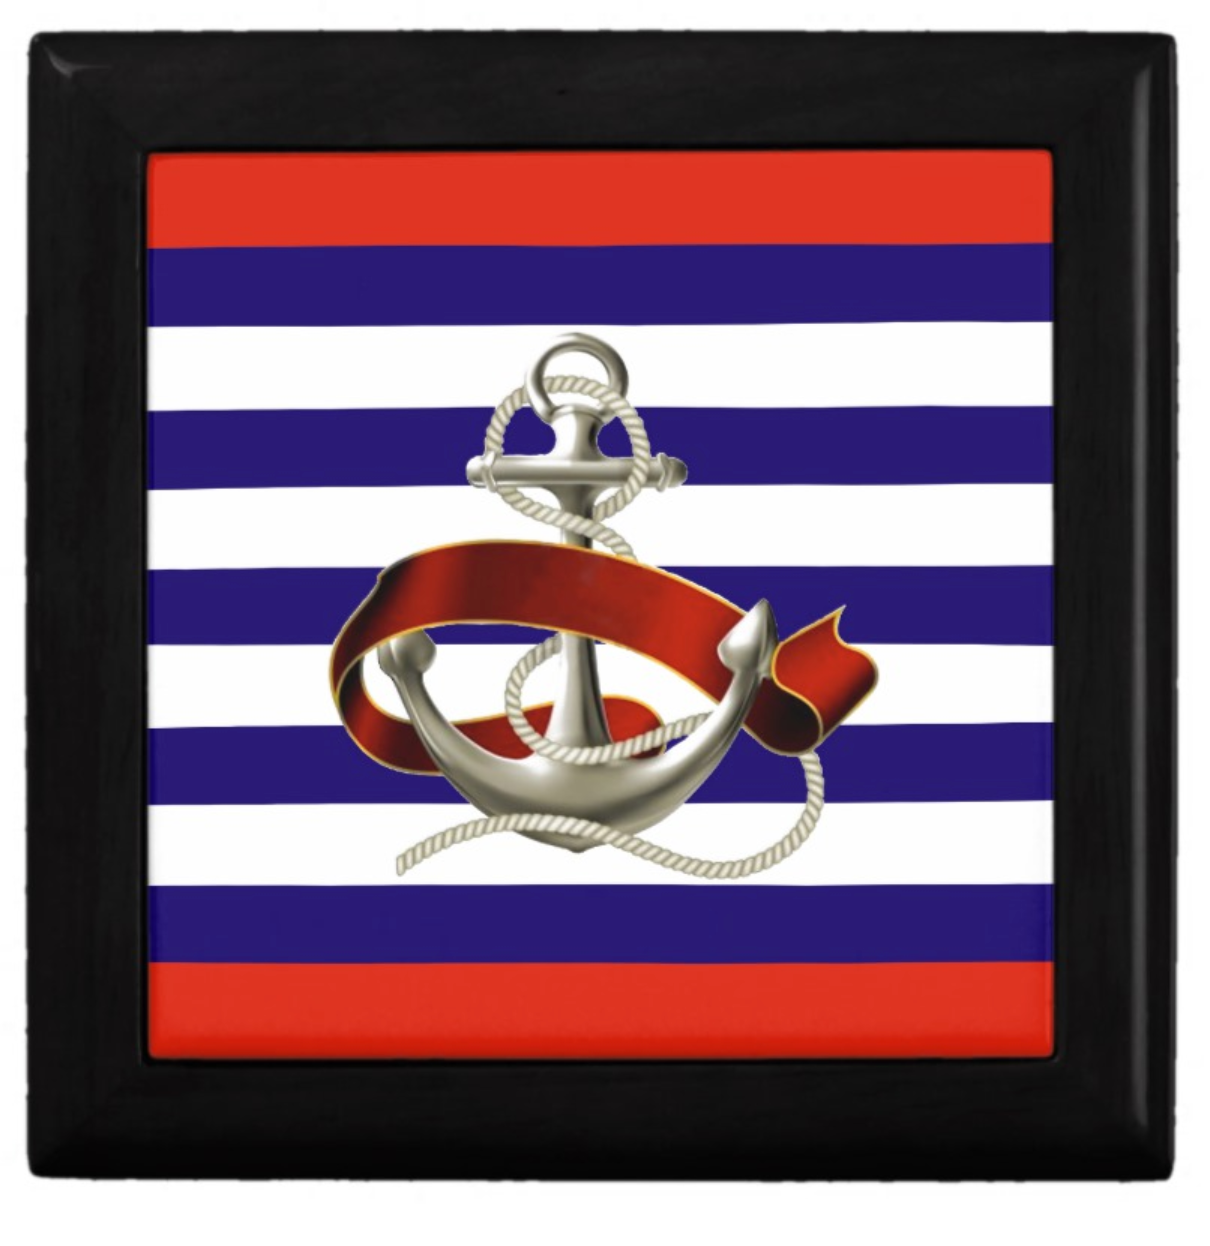 Keepsake/Jewelry Box - Nautical Anchor Design - Black Box